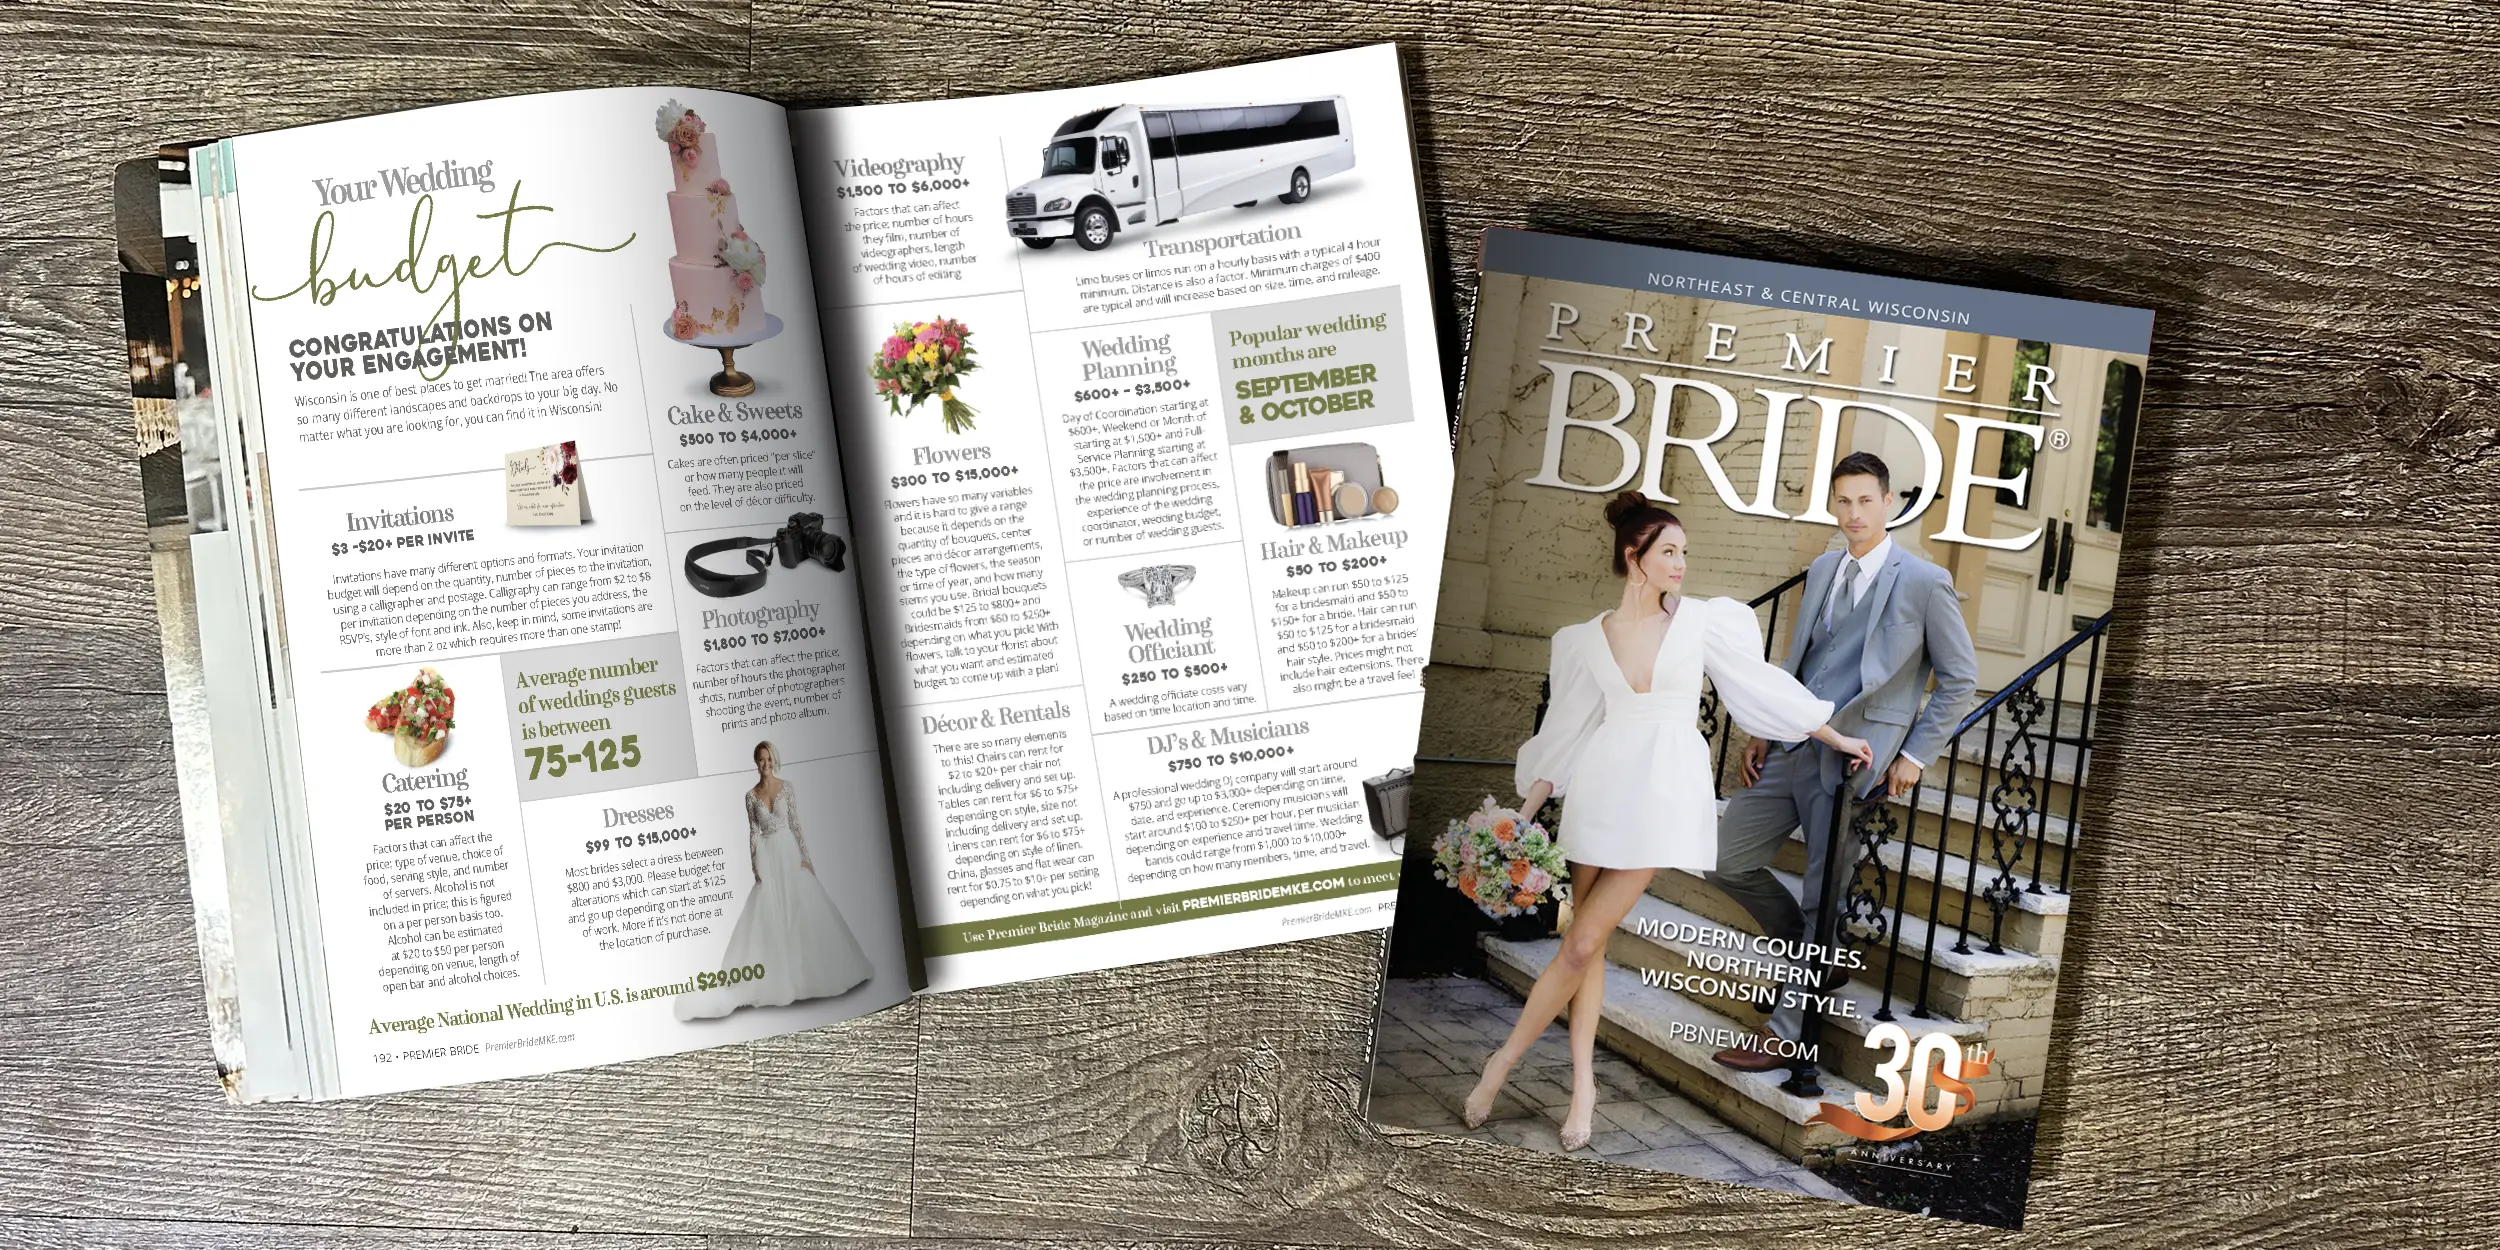 Premier Bride Magazine